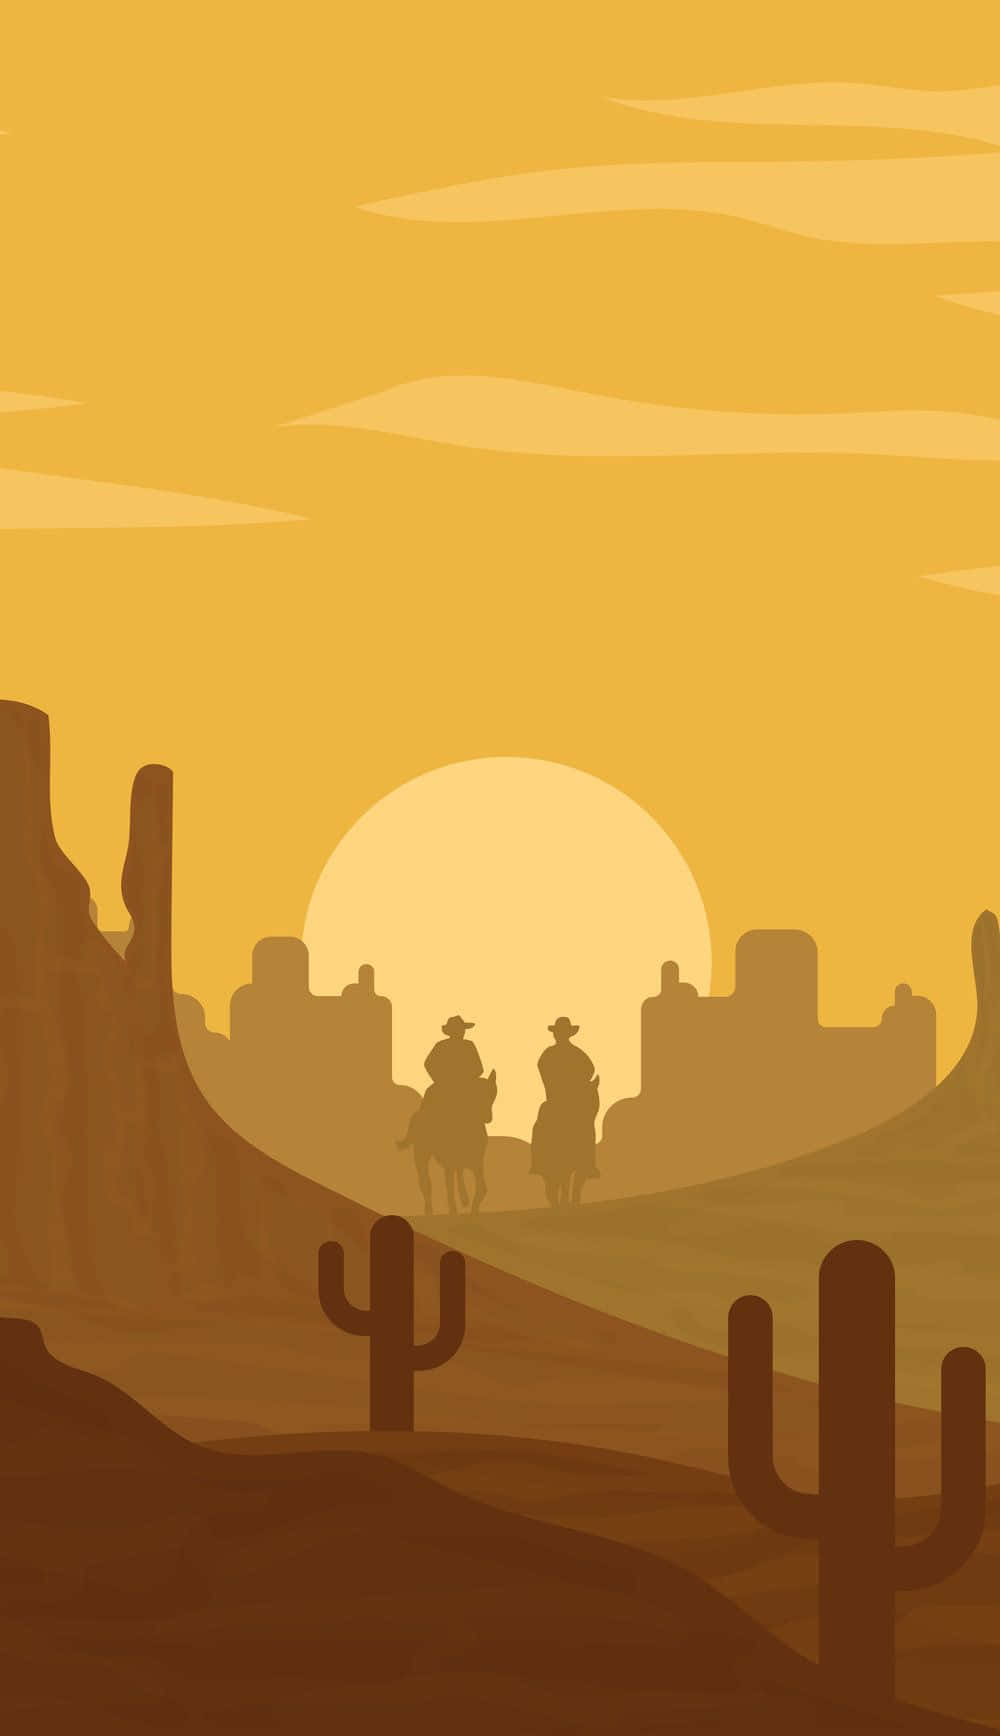 To cowboys rider på heste i ørkenen. Wallpaper